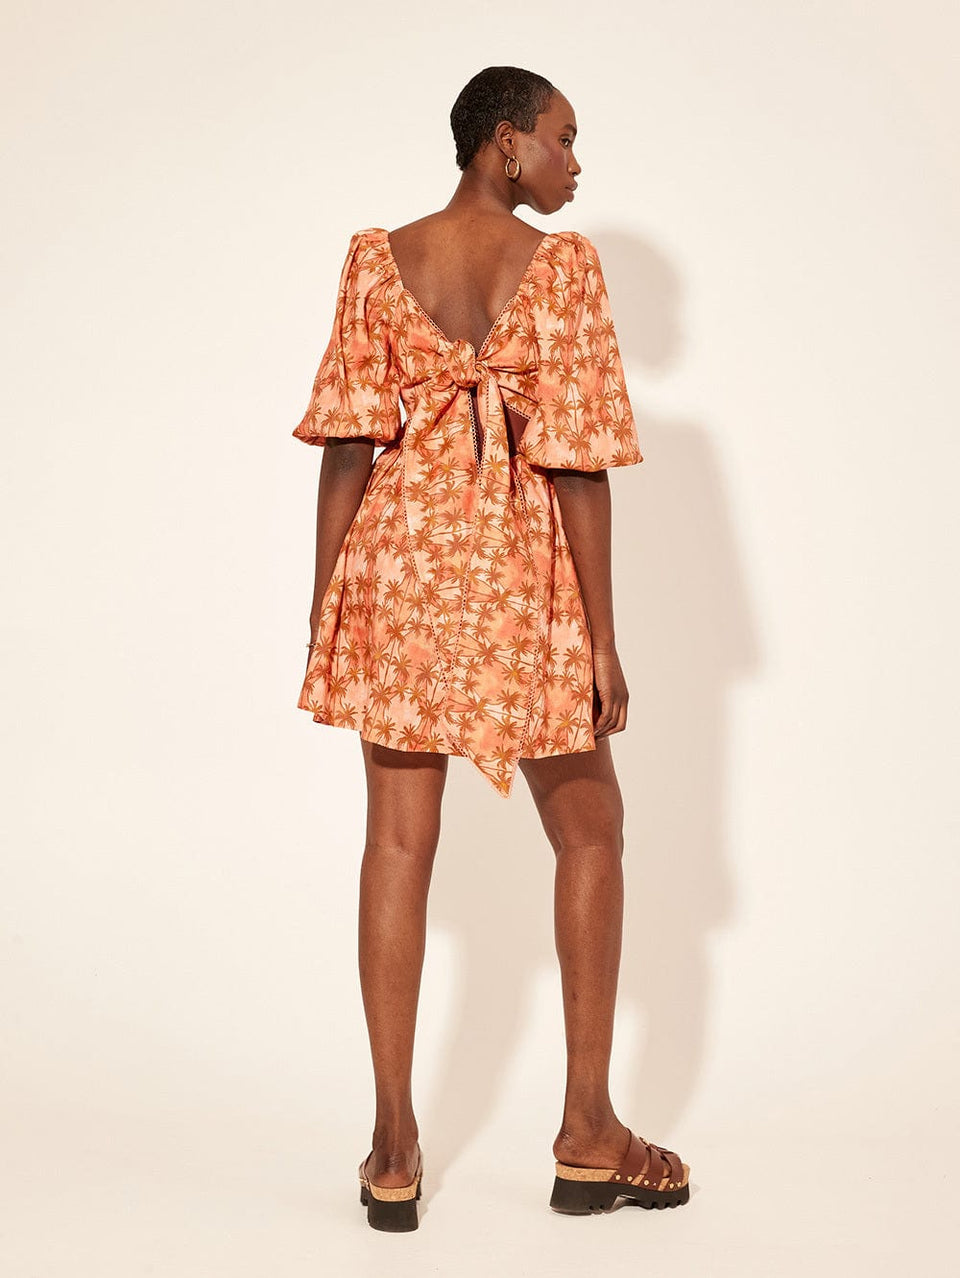 Leilani Mini Dress KIVARI | Model wears bronze and peach palm printed mini dress back view